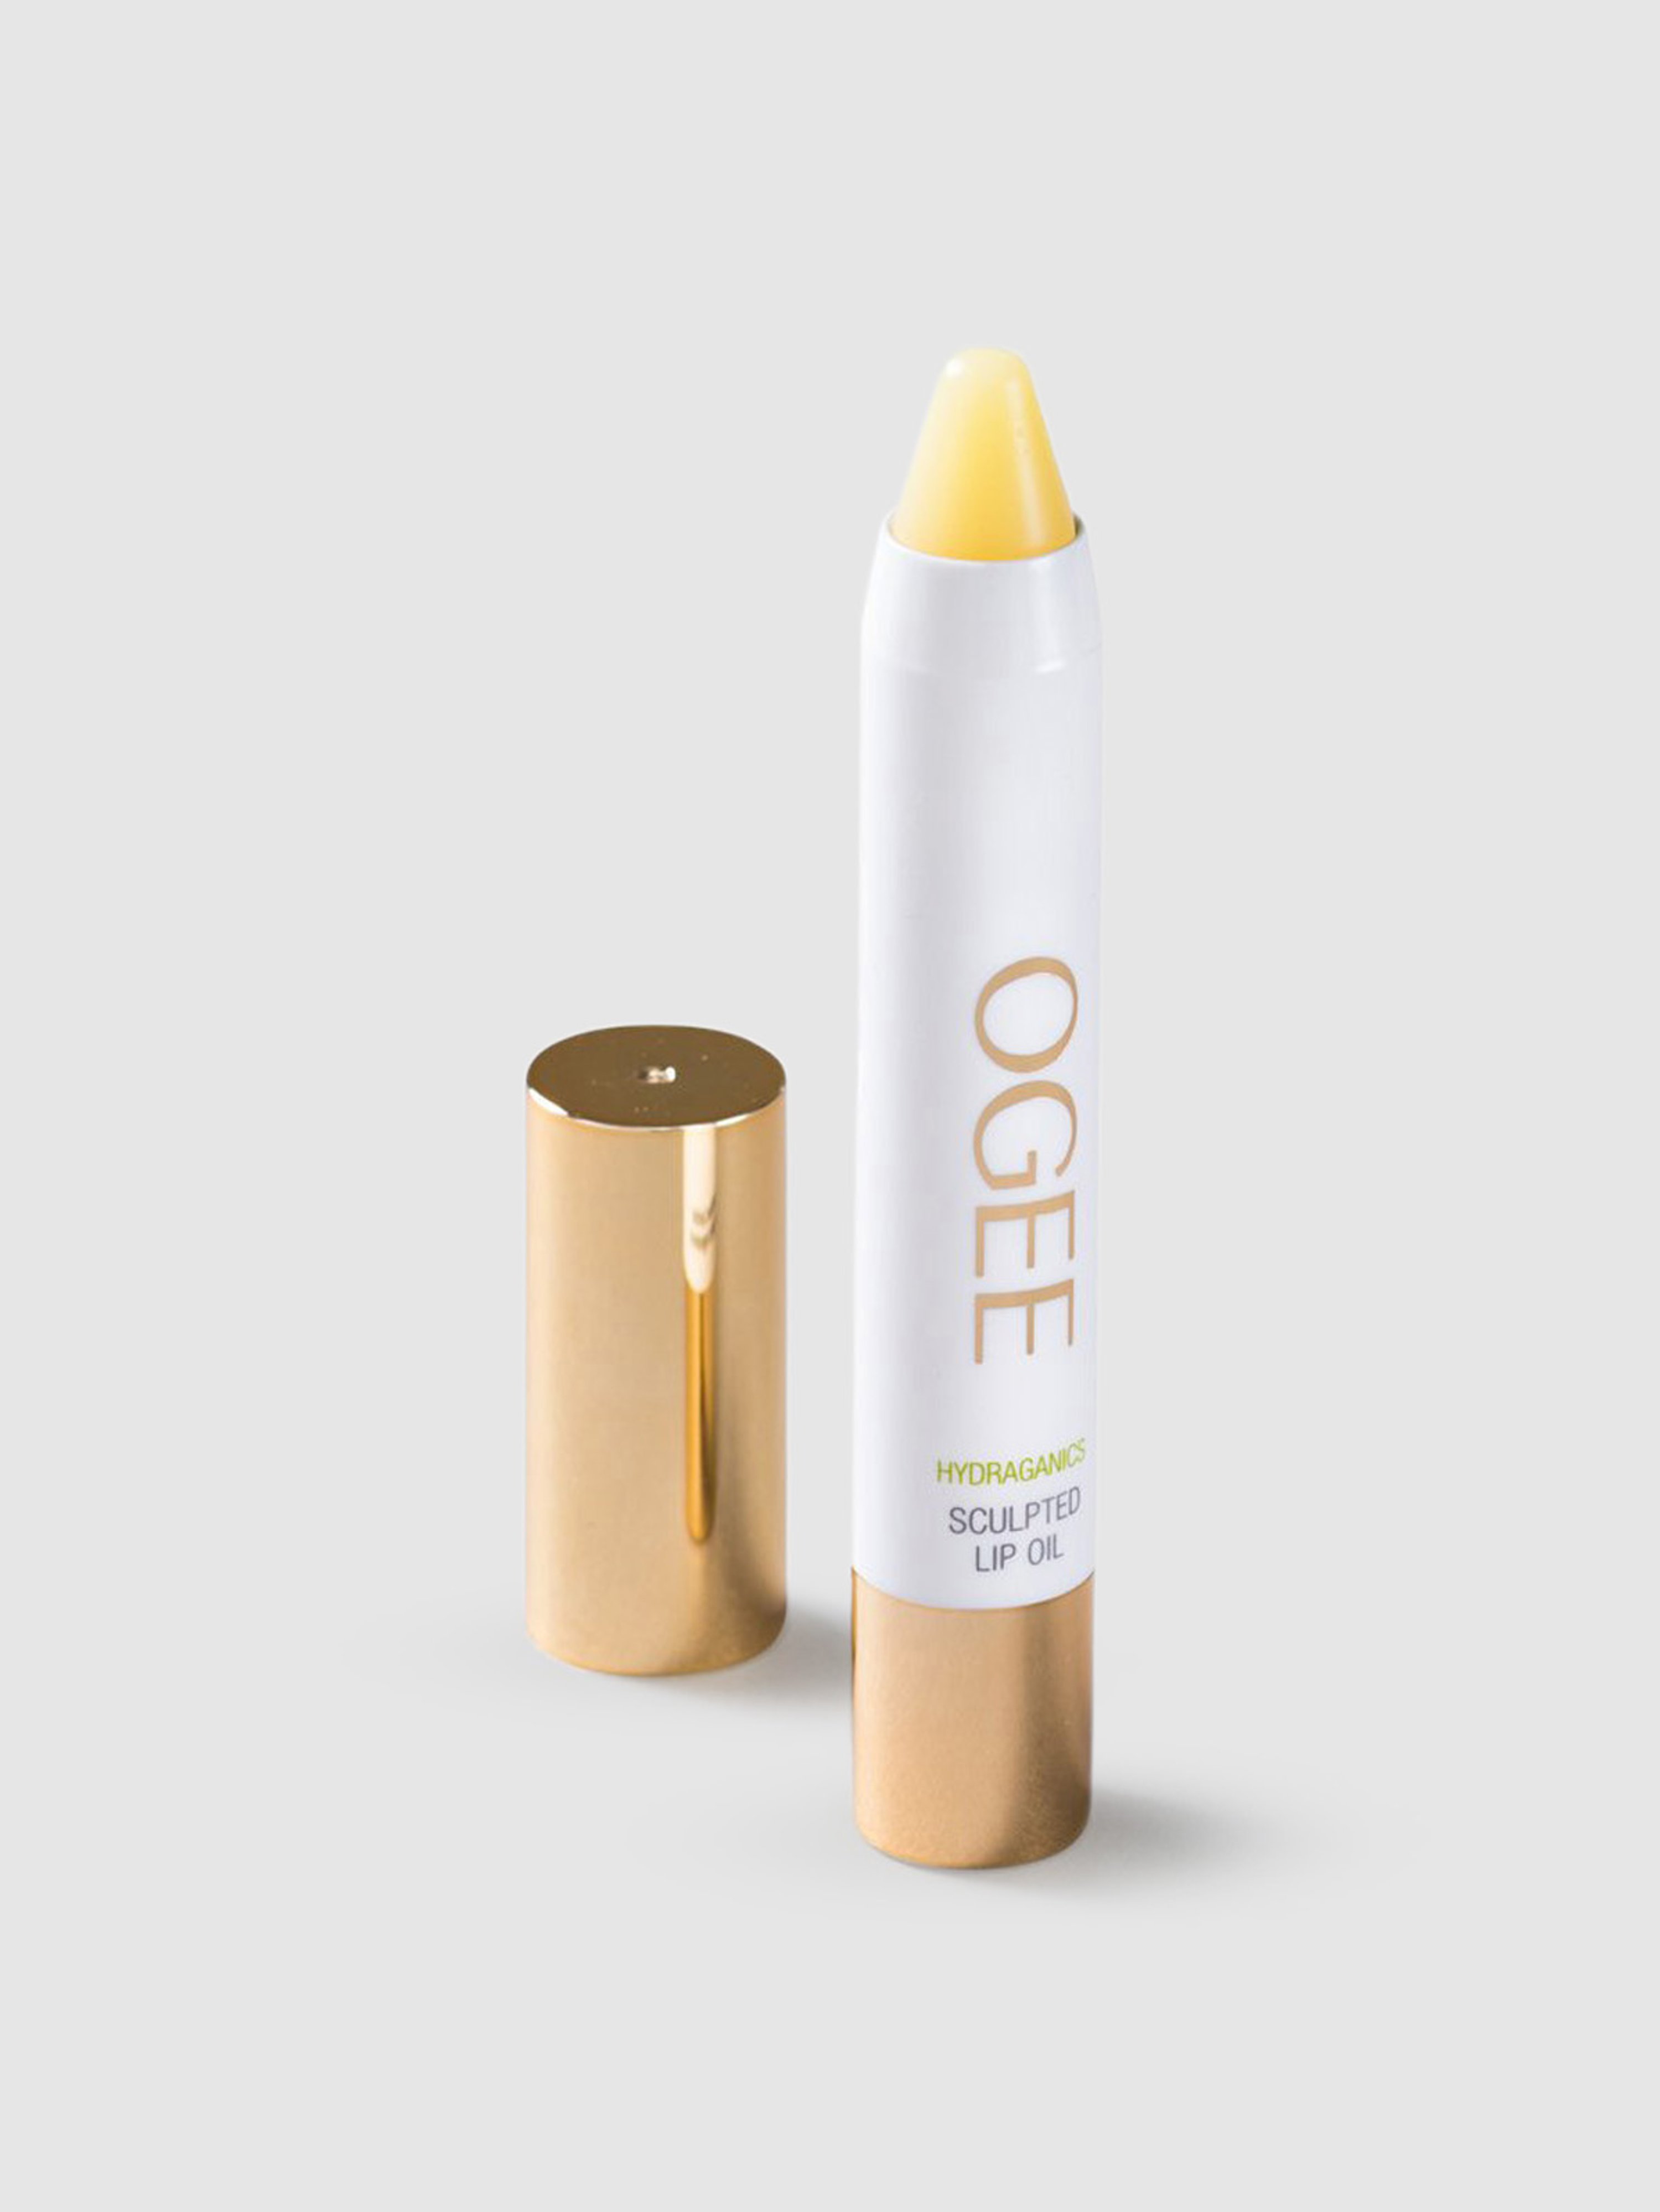 Ogee Luxury Organics Sculpted Lip Oil